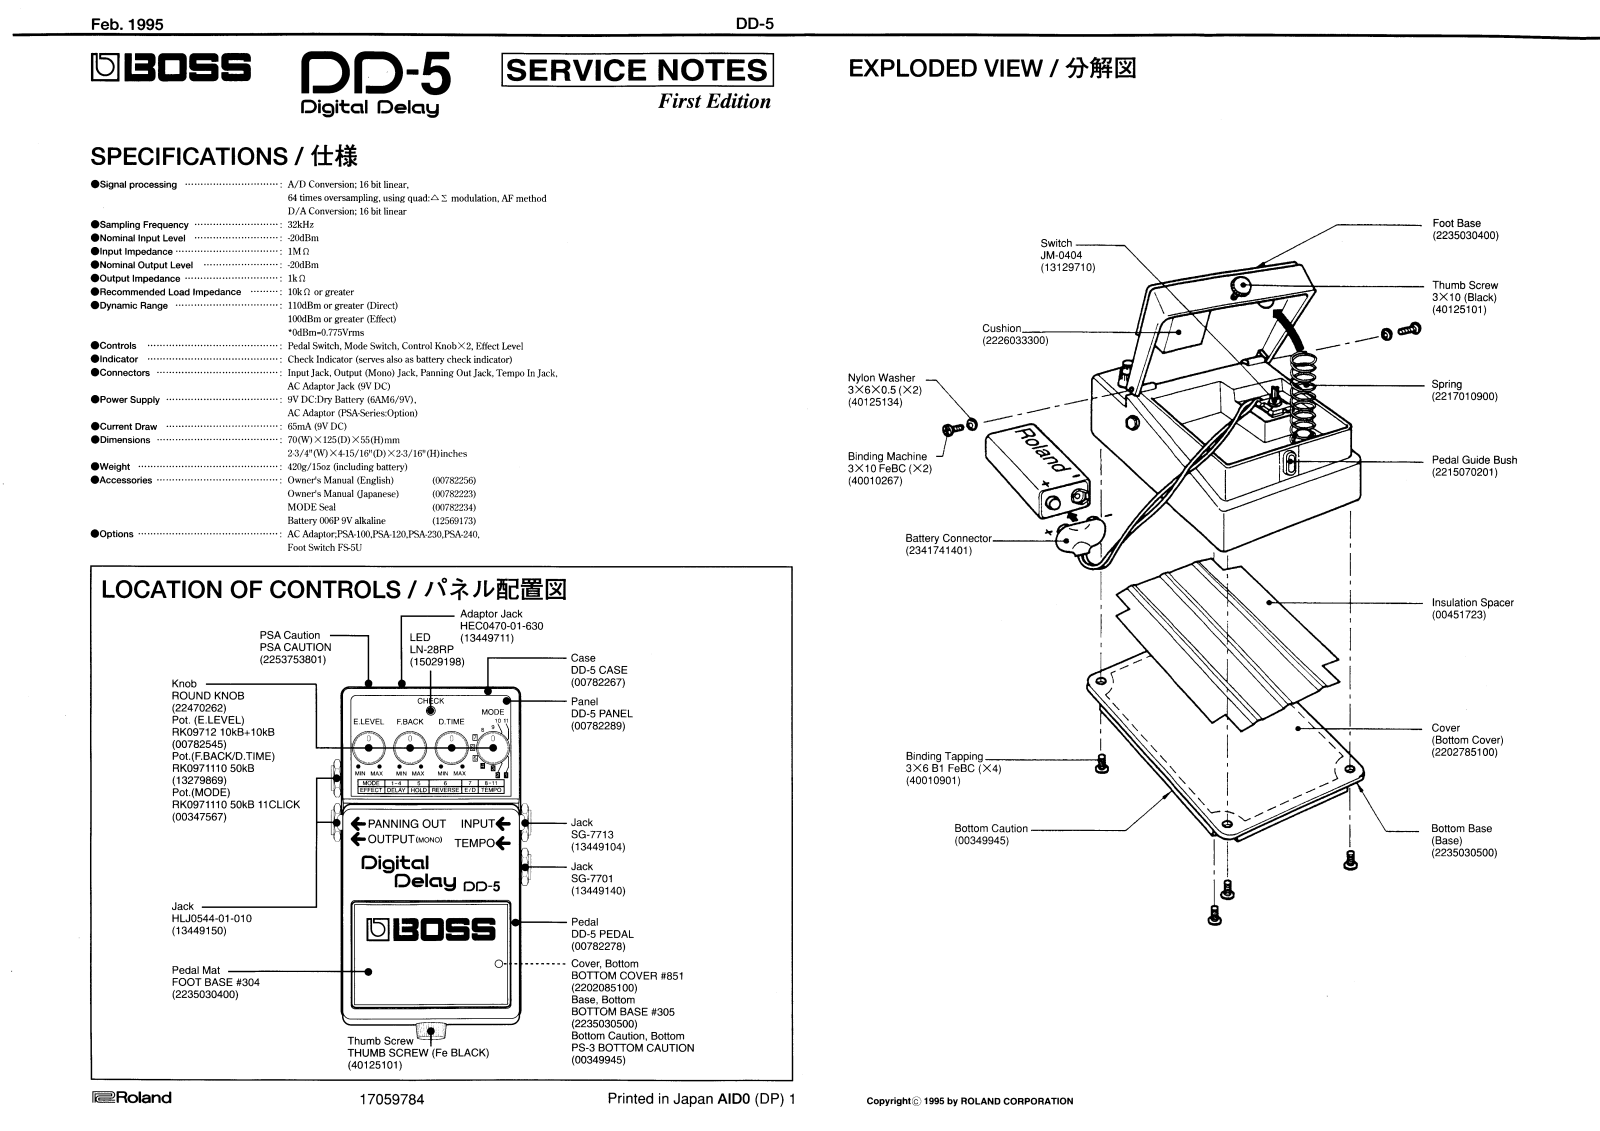 BOSS DD-5 Service Manual